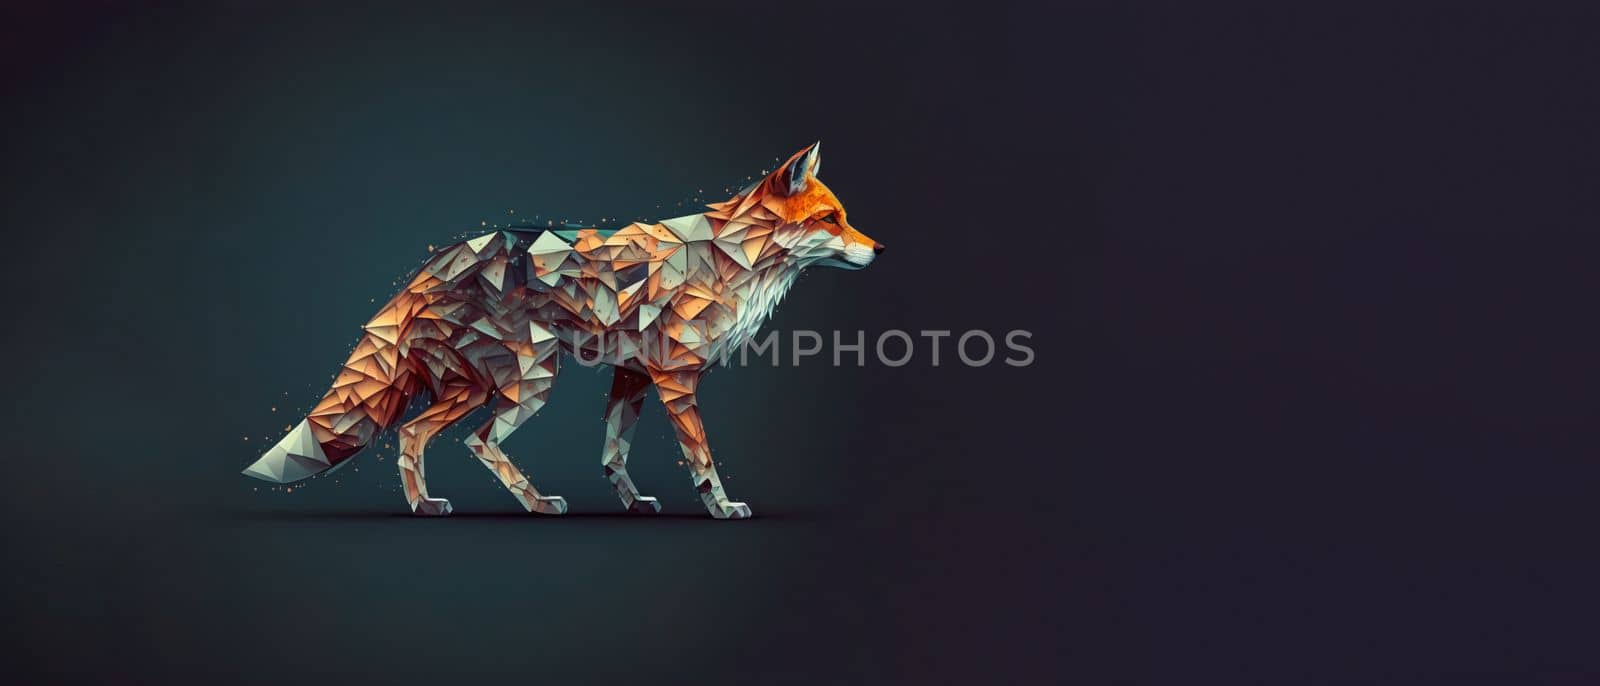 geometric fox illustration, graphic art in low polygon, geometric illustration by igor010